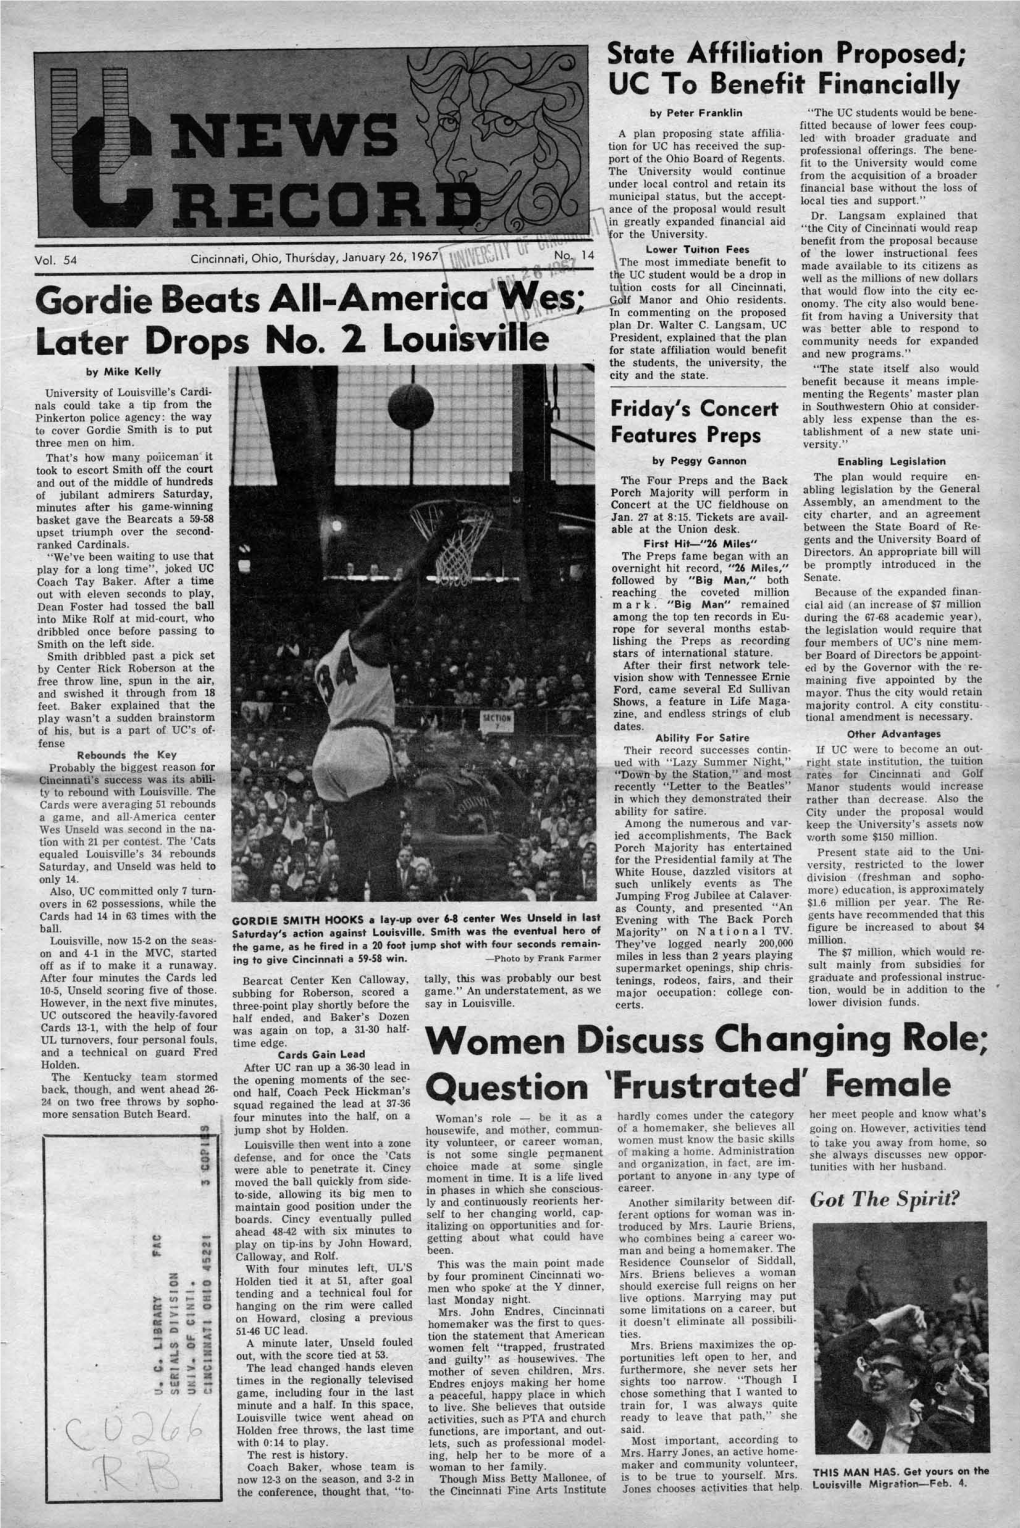 University of Cincinnati News Record. Thursday, January 26, 1967. Vol